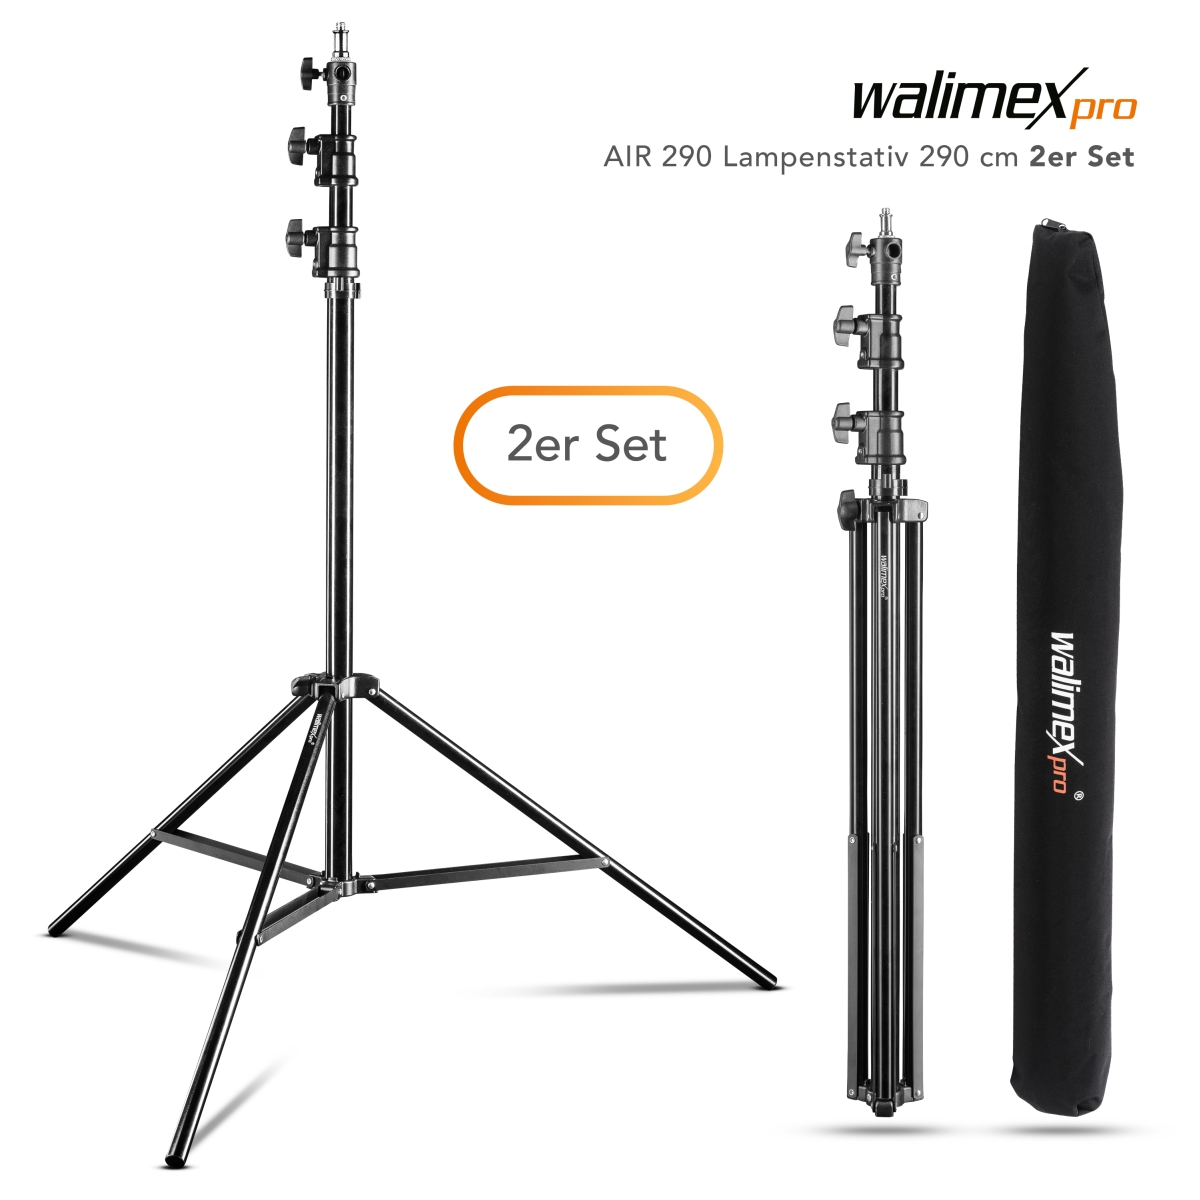 Walimex pro AIR 290 Deluxe Lampenst. 290cm 2er Set